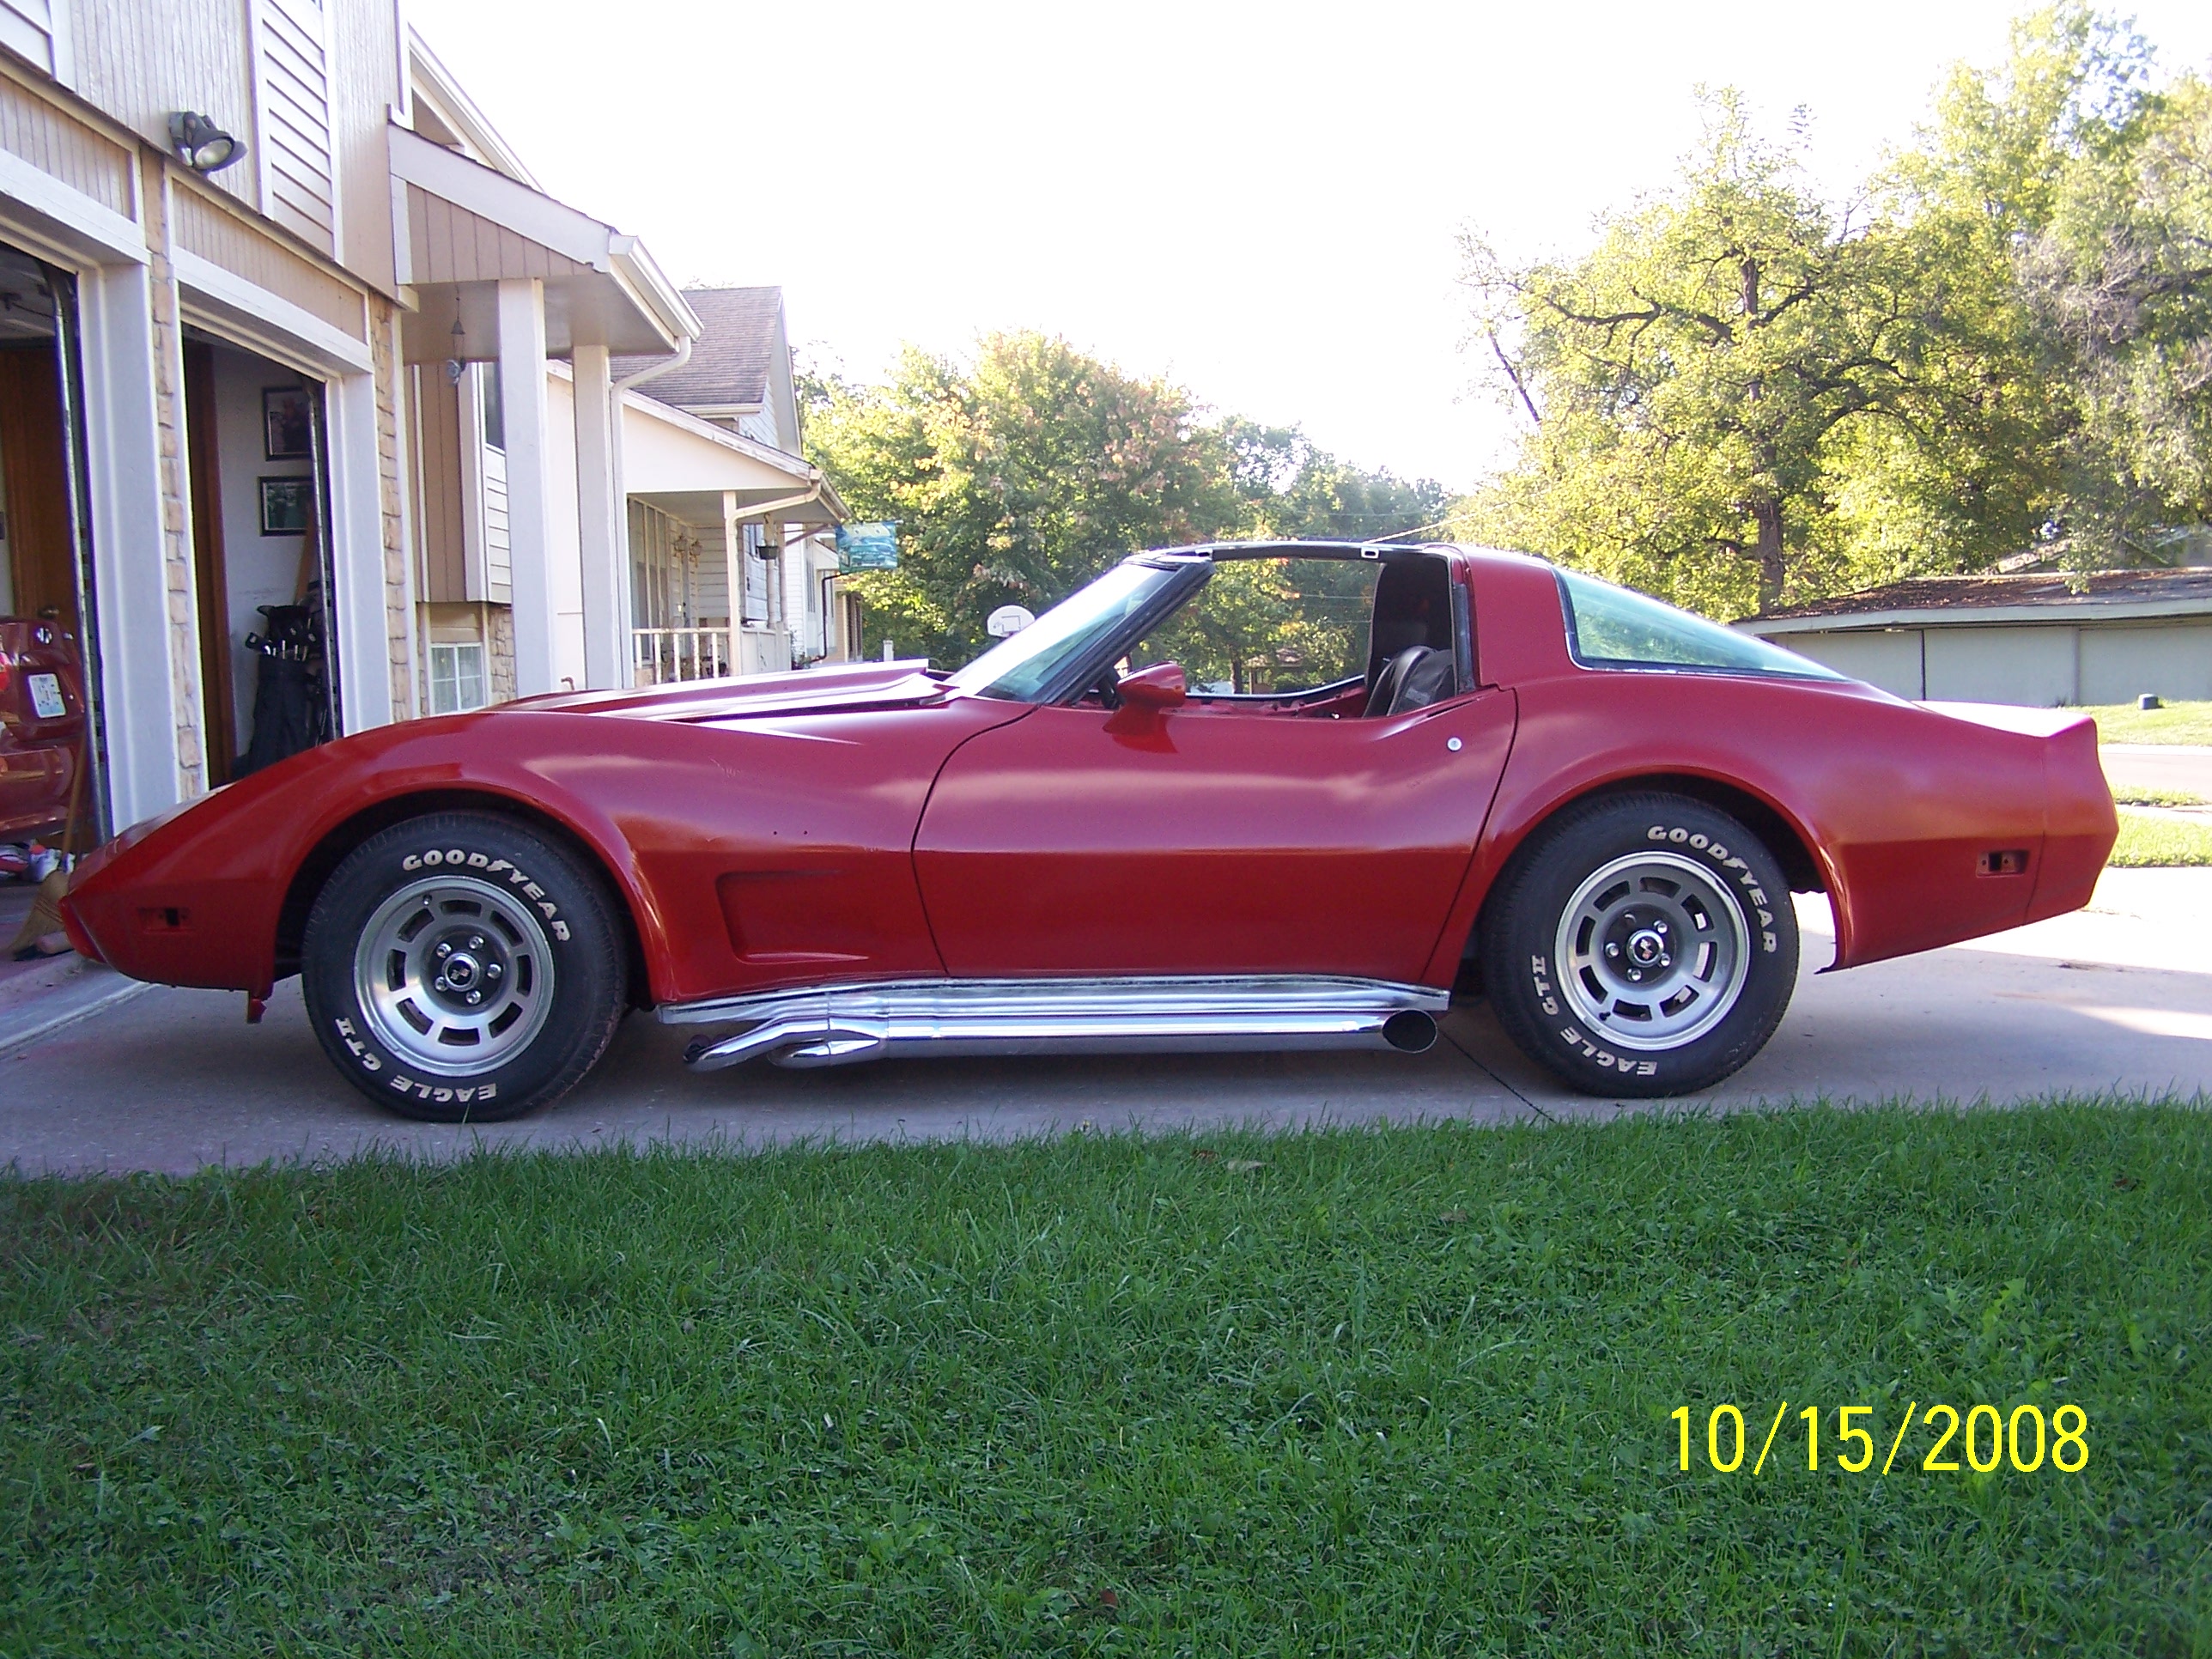 My 1979 Corvette